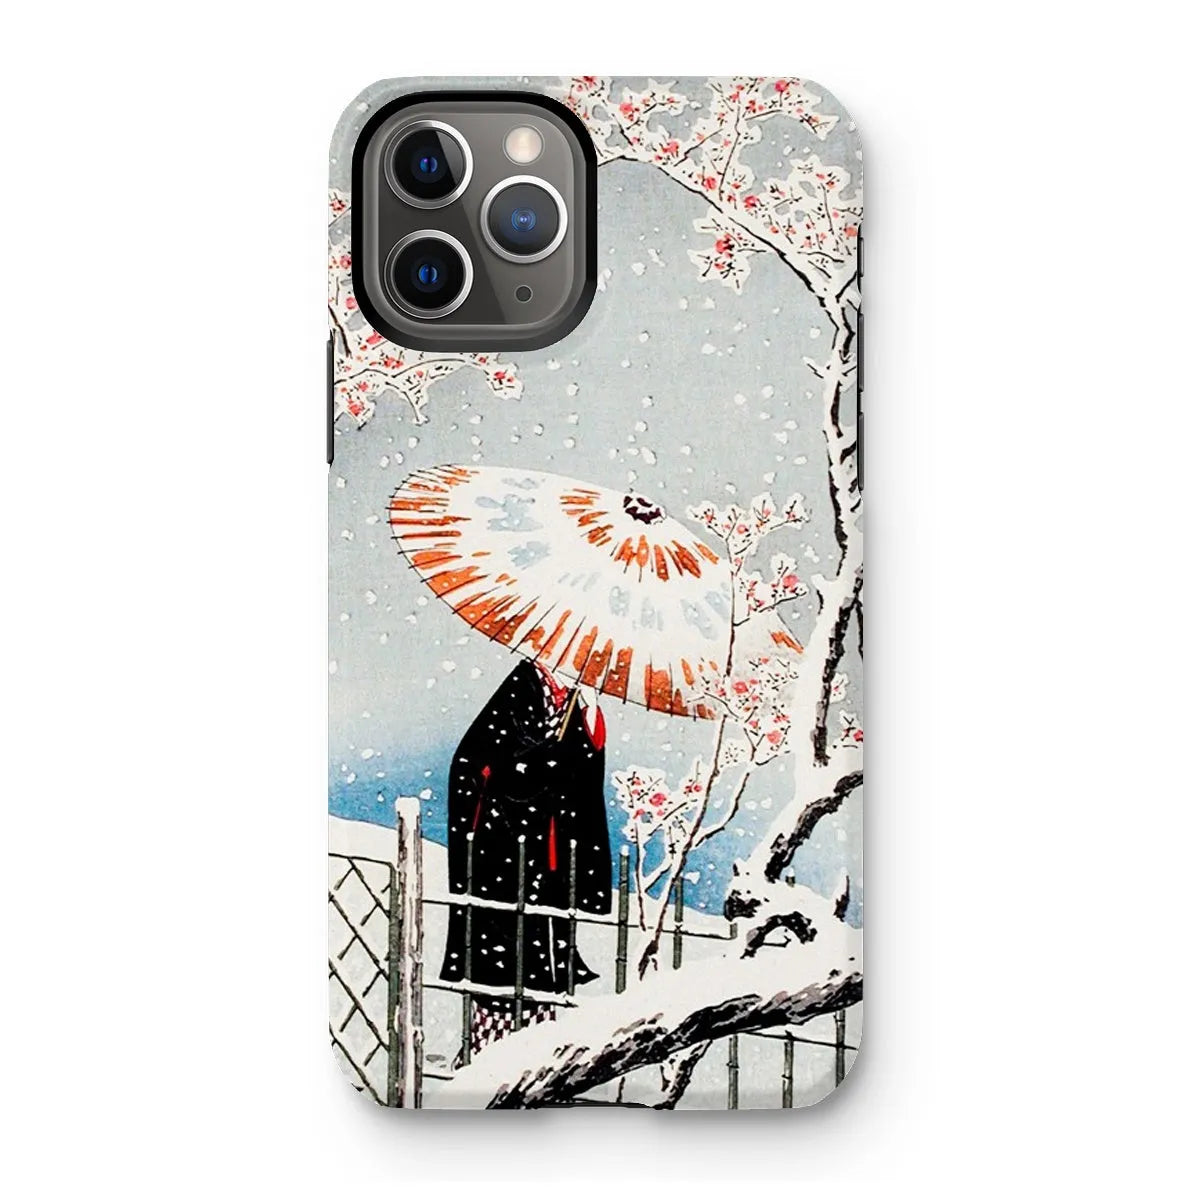 Plum Tree In Snow - Shin-hanga Phone Case - Hiroaki Takahashi - Iphone 11 Pro / Matte - Mobile Phone Cases - Aesthetic